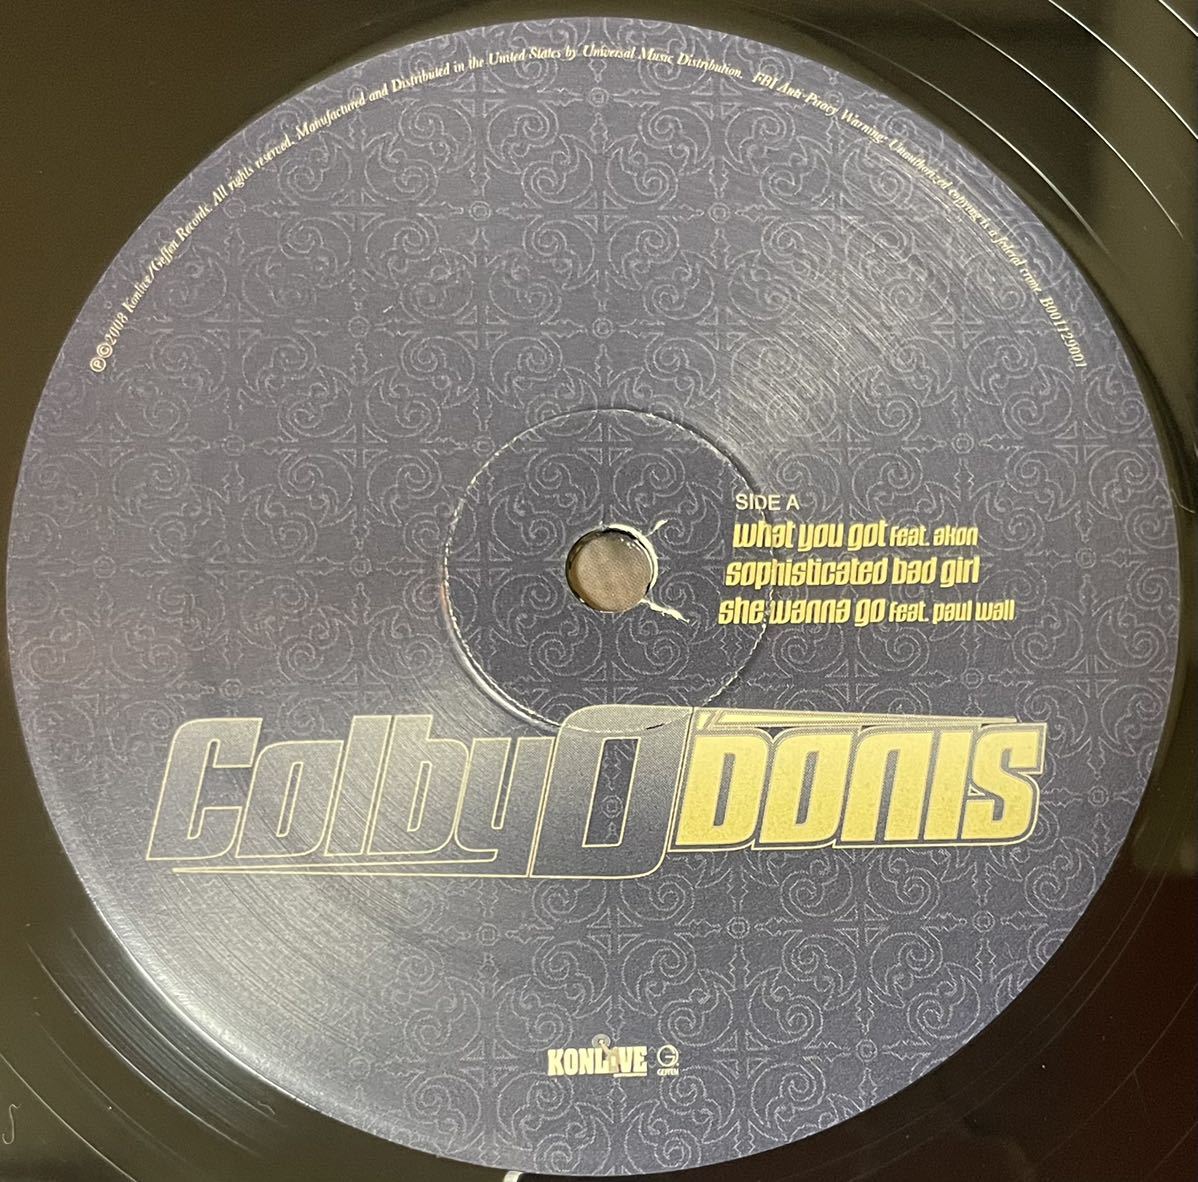 Colby O'donis 人気曲WHAT YOU GOT収録のアルバム2枚組 12inchその他にもプロモーション盤 レア盤 人気レコード 多数出品中_画像5